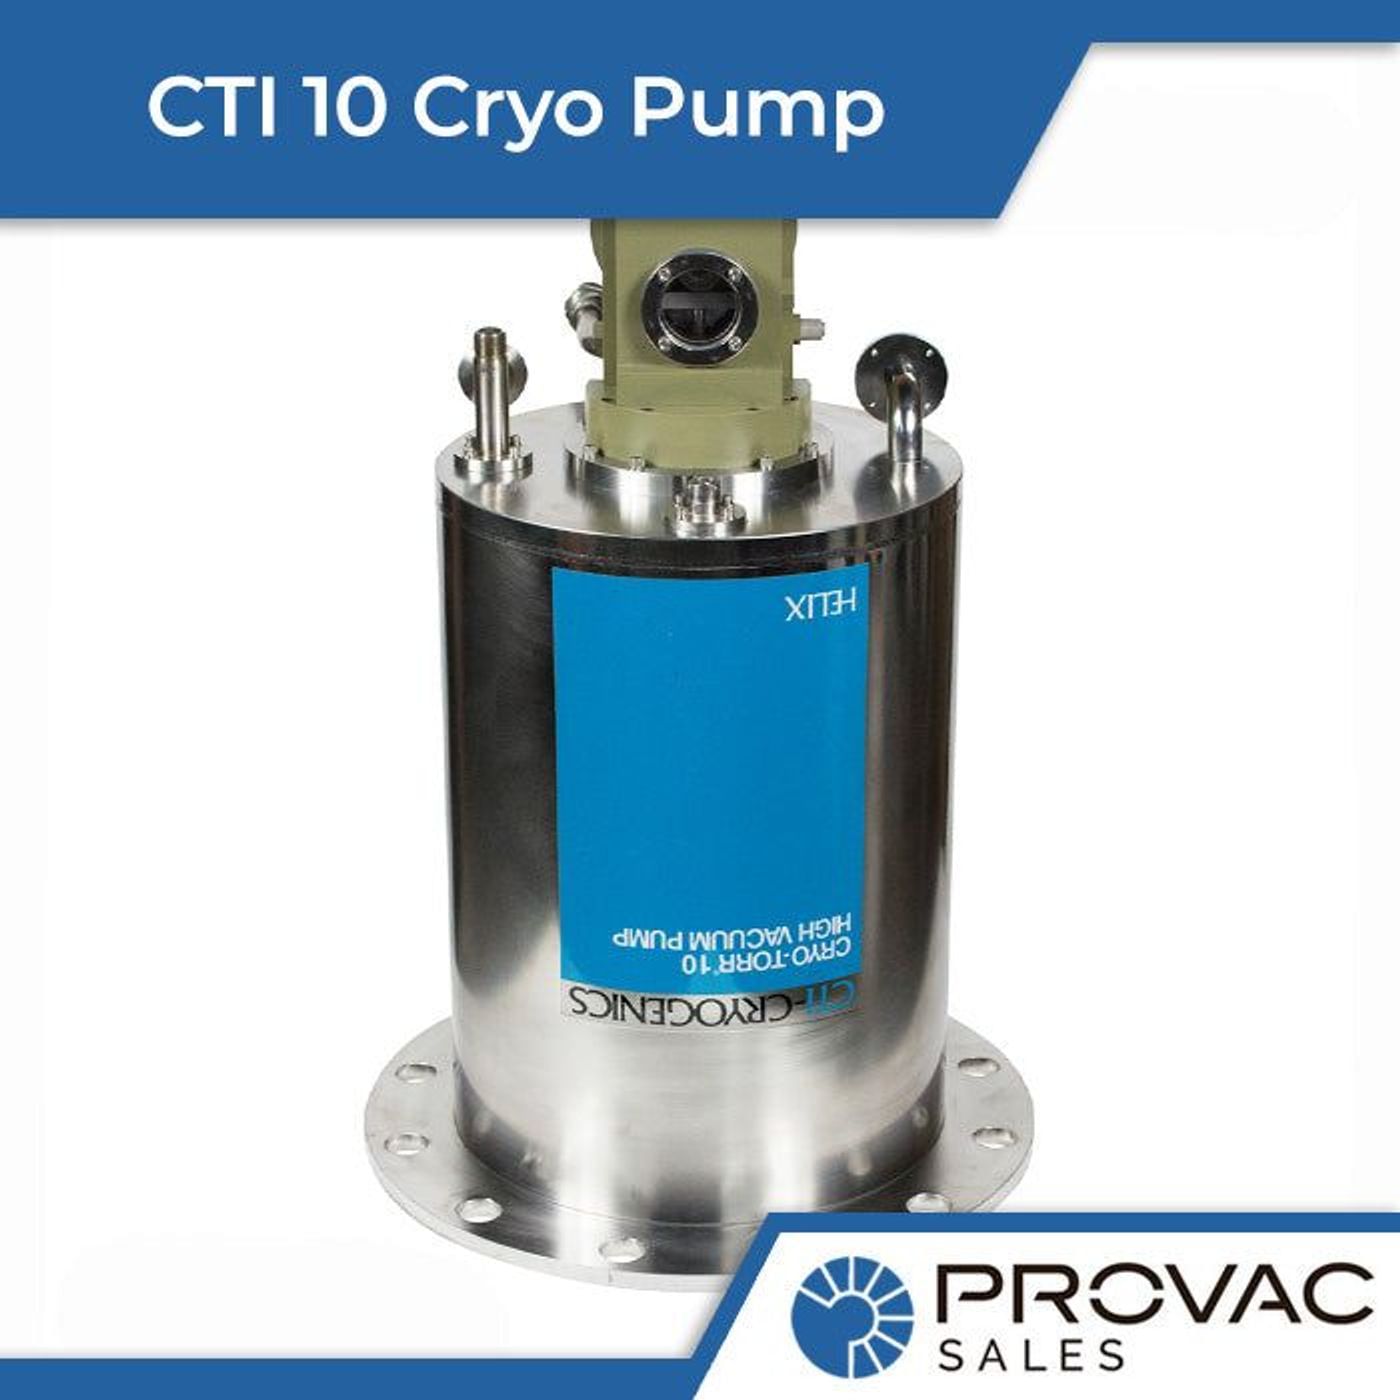 CTI 10 Cryo Pump